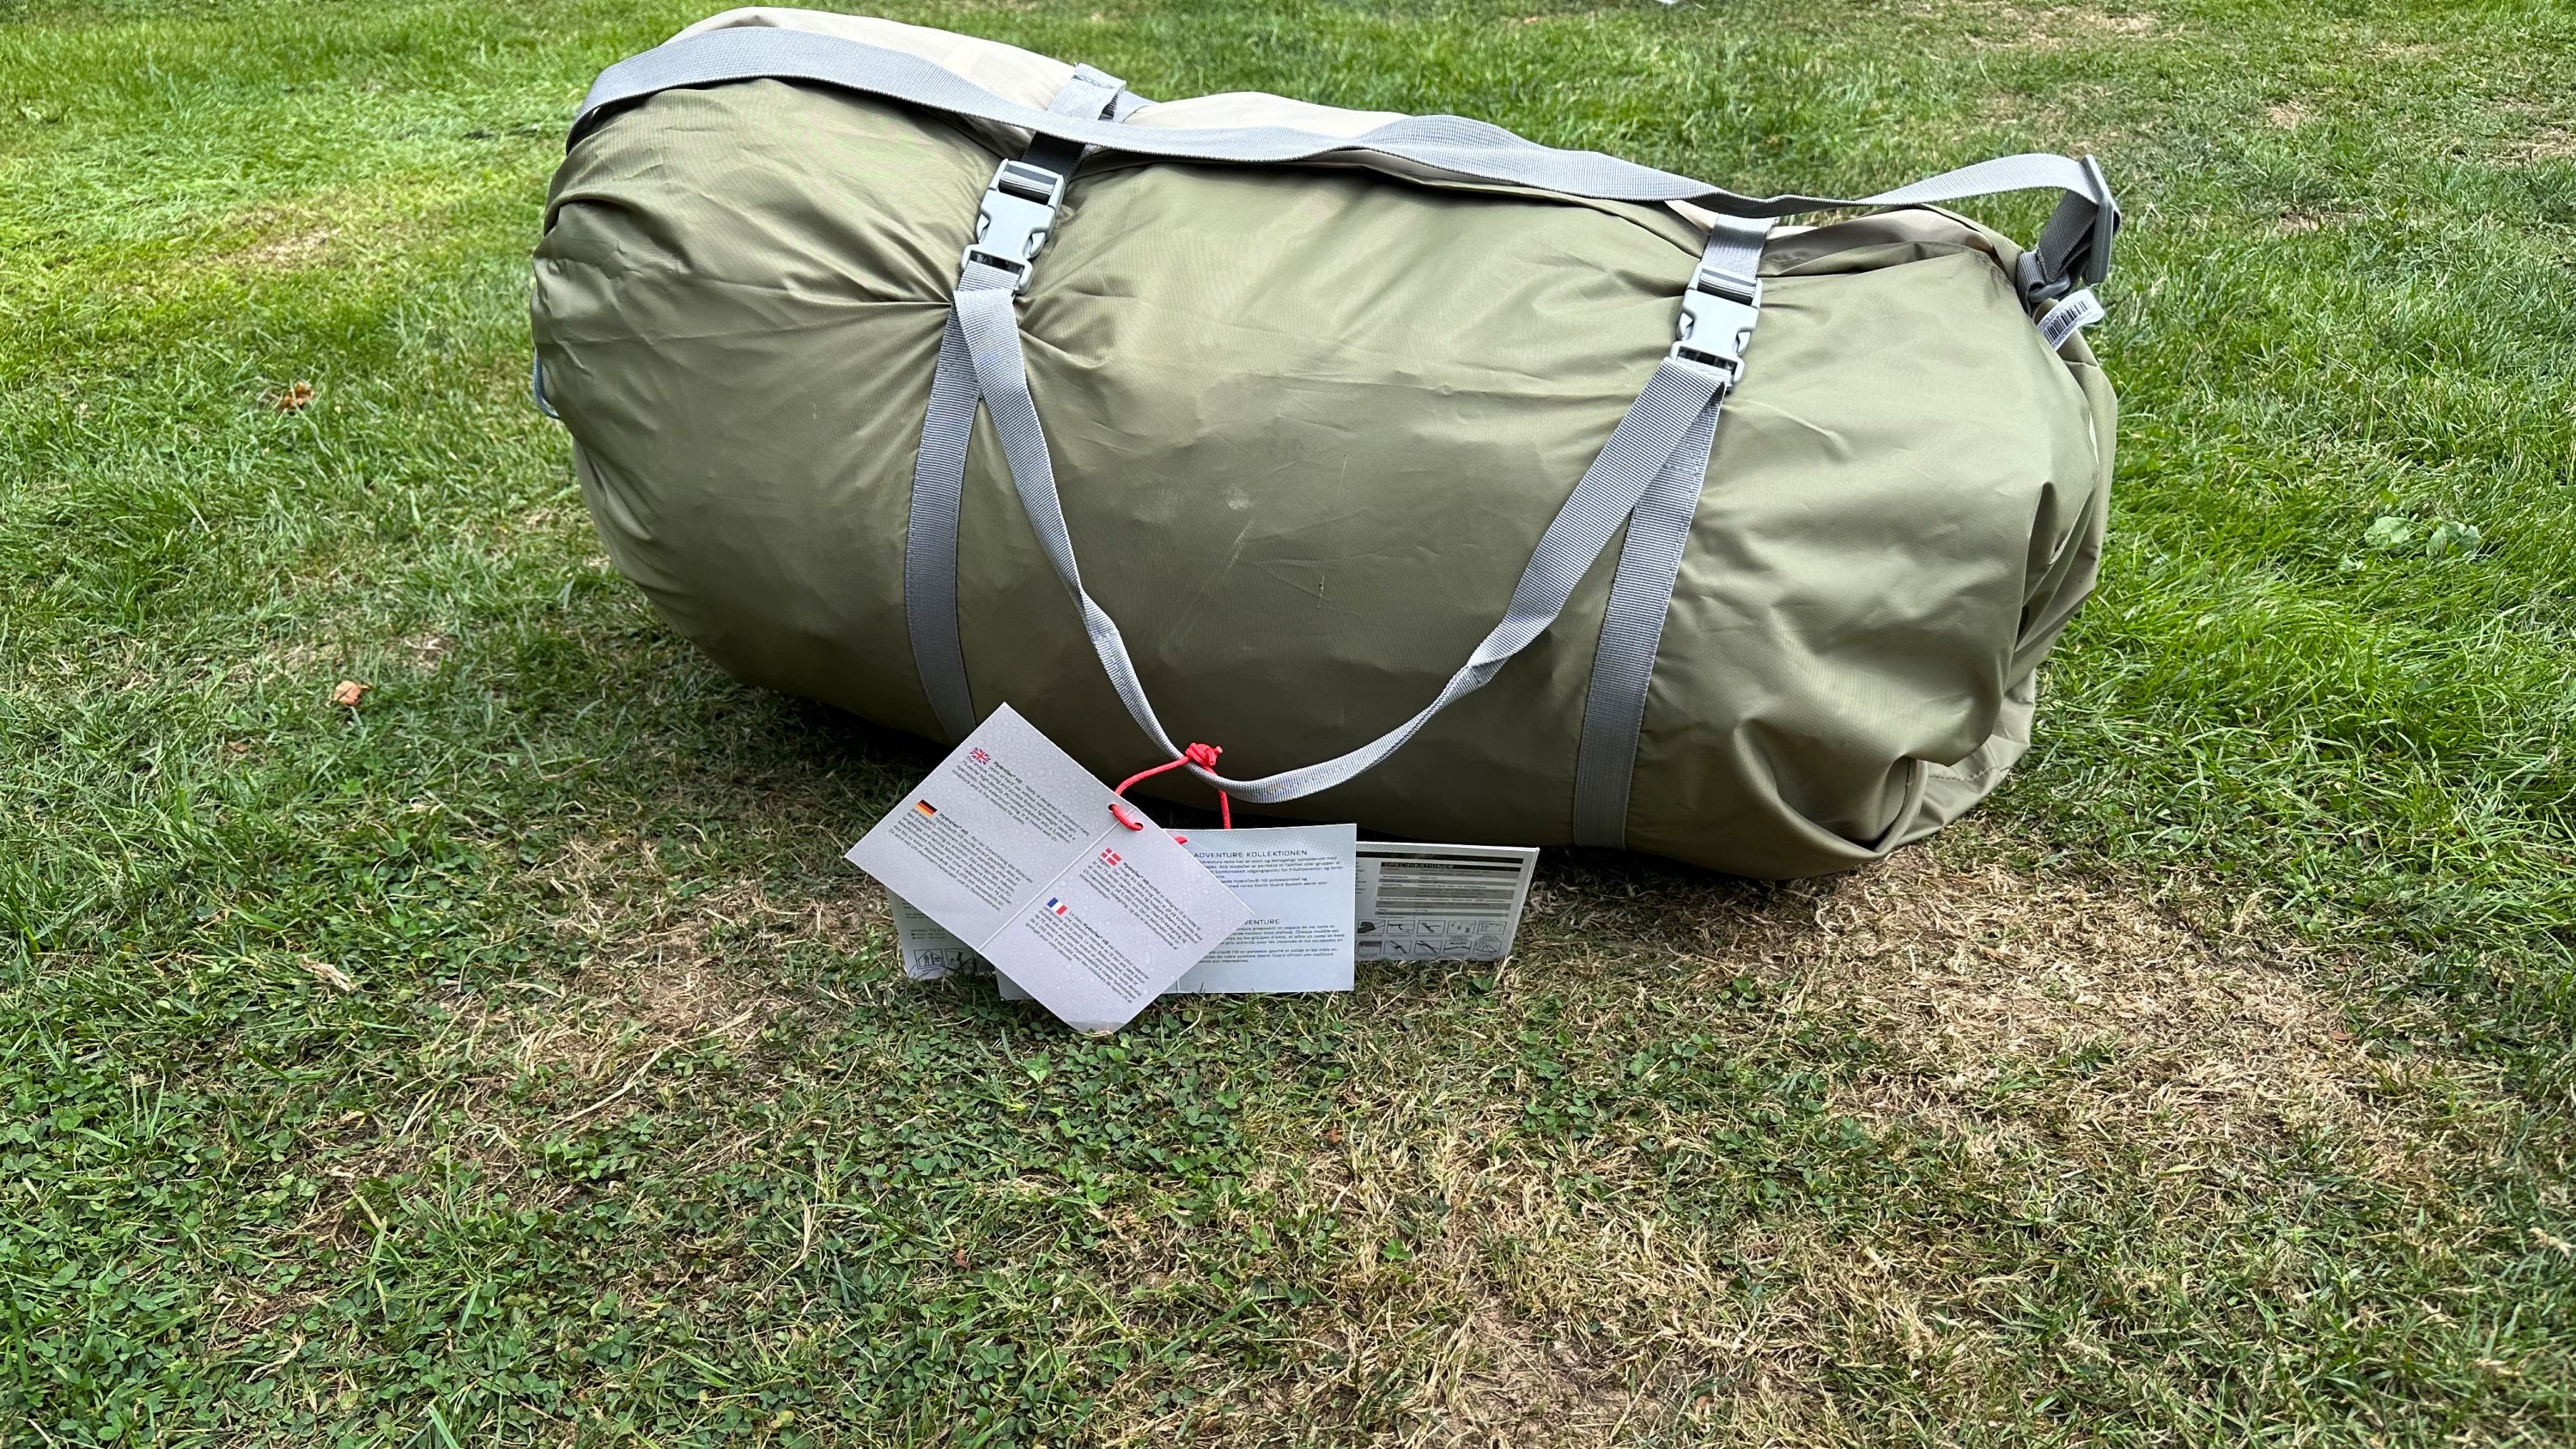 Robens Cobra Stone 5 tent in its bag